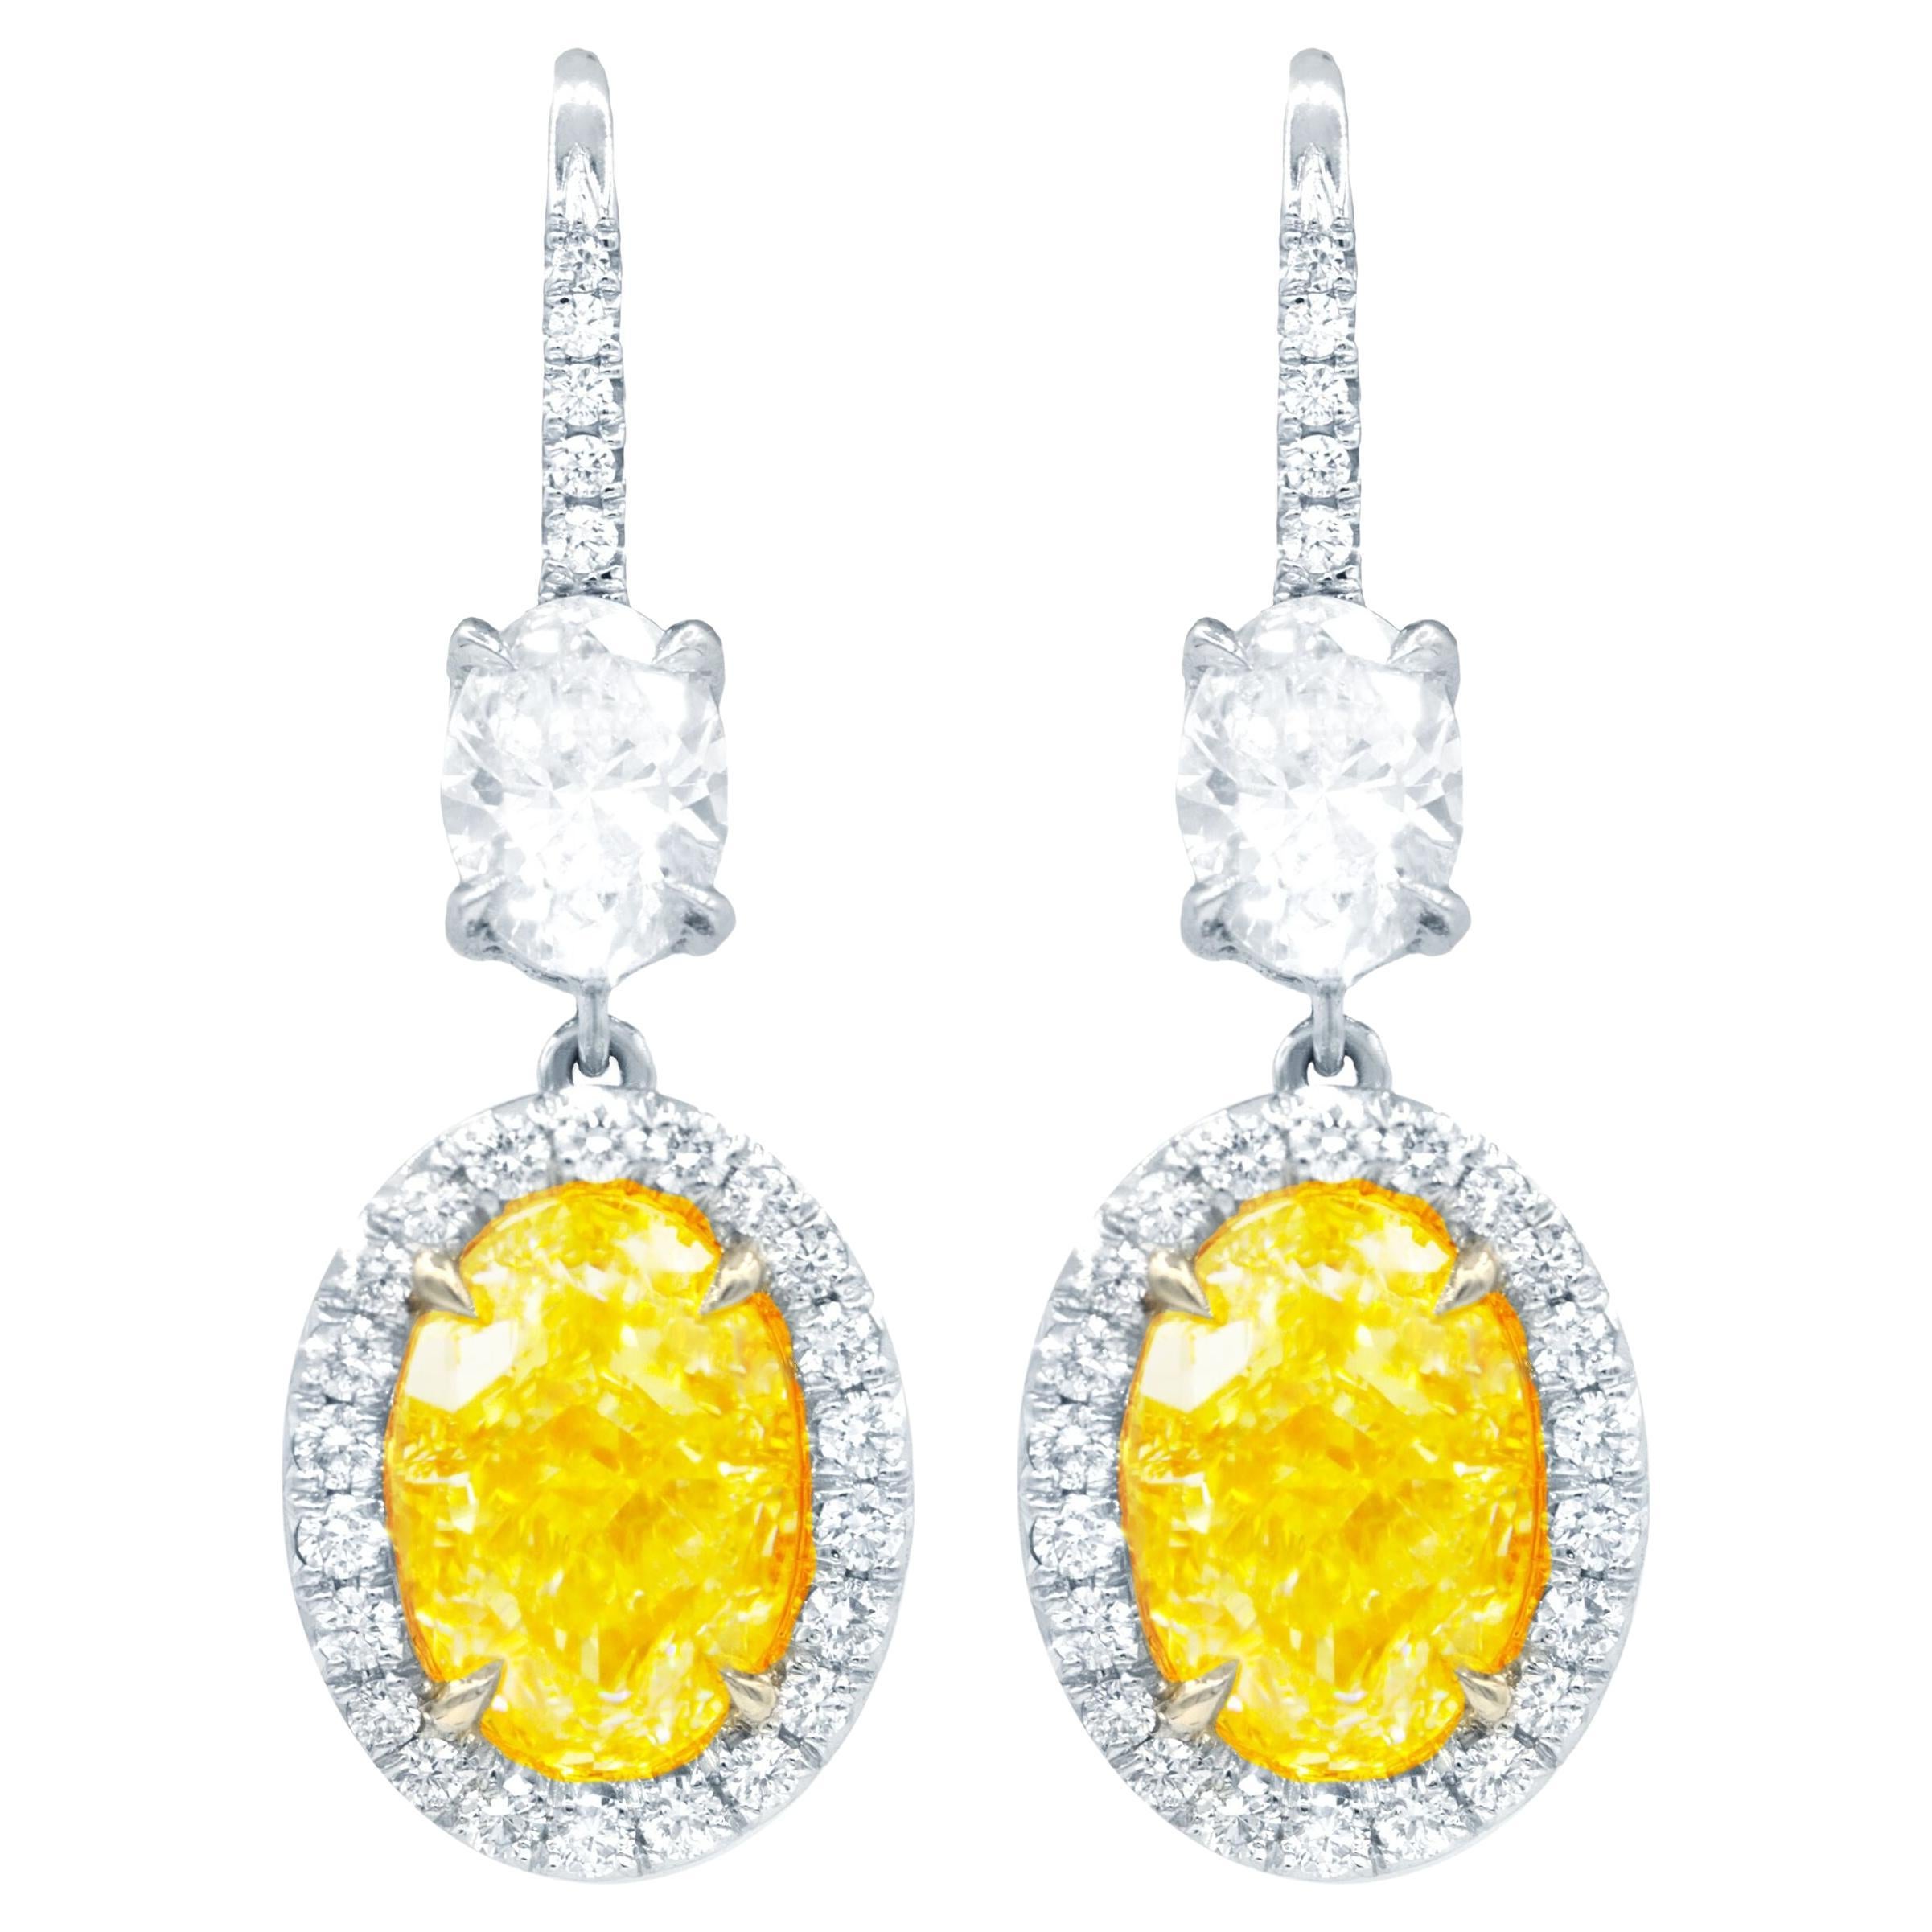 Diana M. GIA Certified 8 Carat Oval Shaped Yellow Diamond Earrings